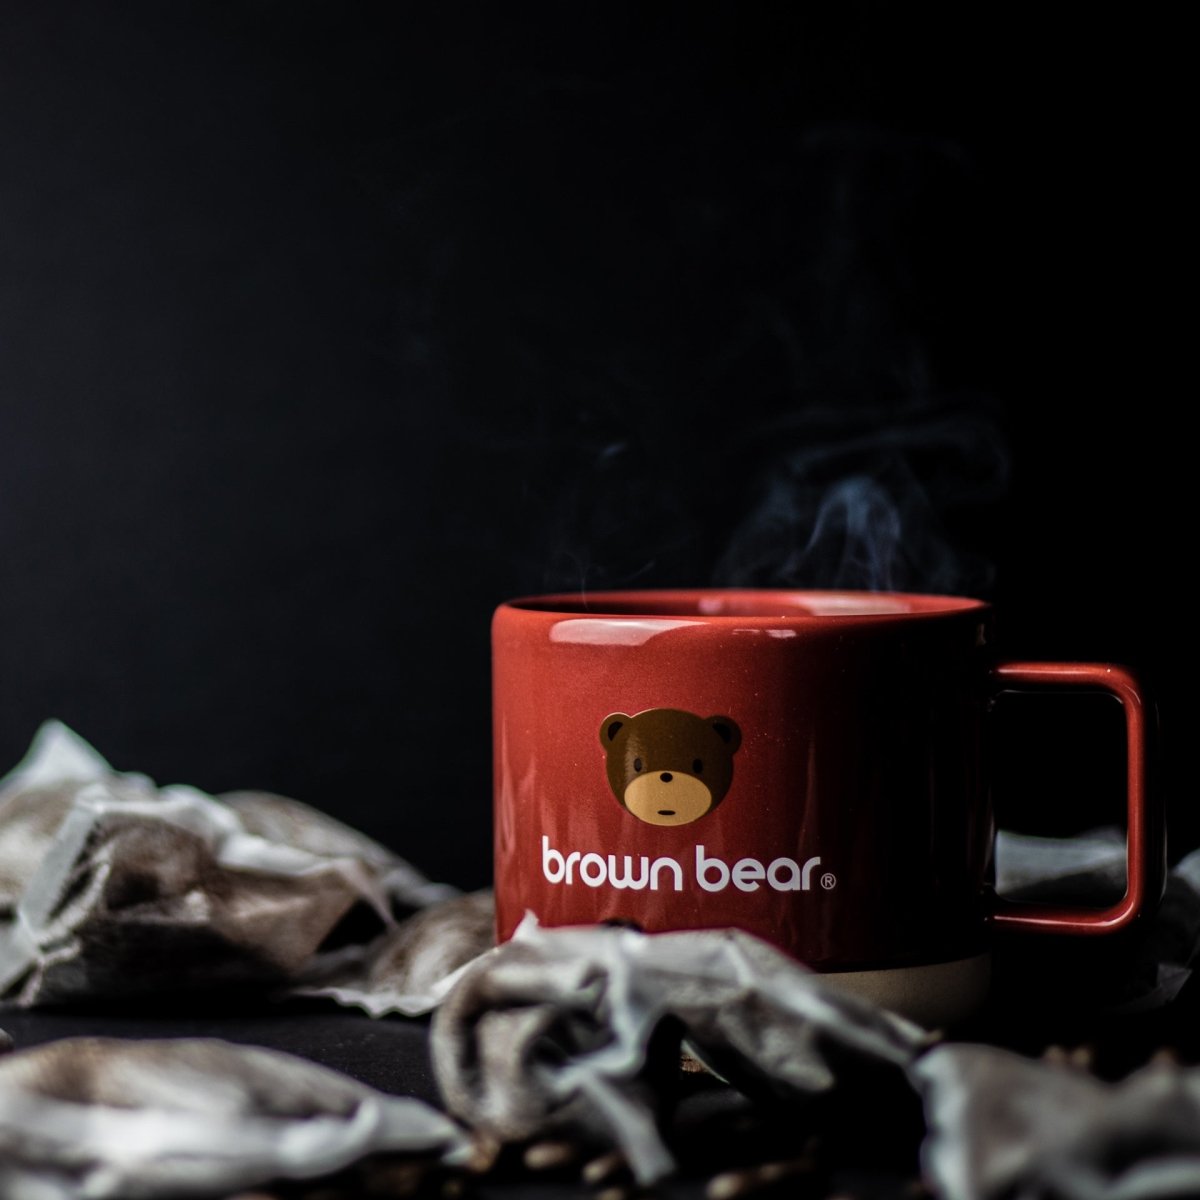 Premium Travel Mug from Black-Blum with a Brown Bear engraving